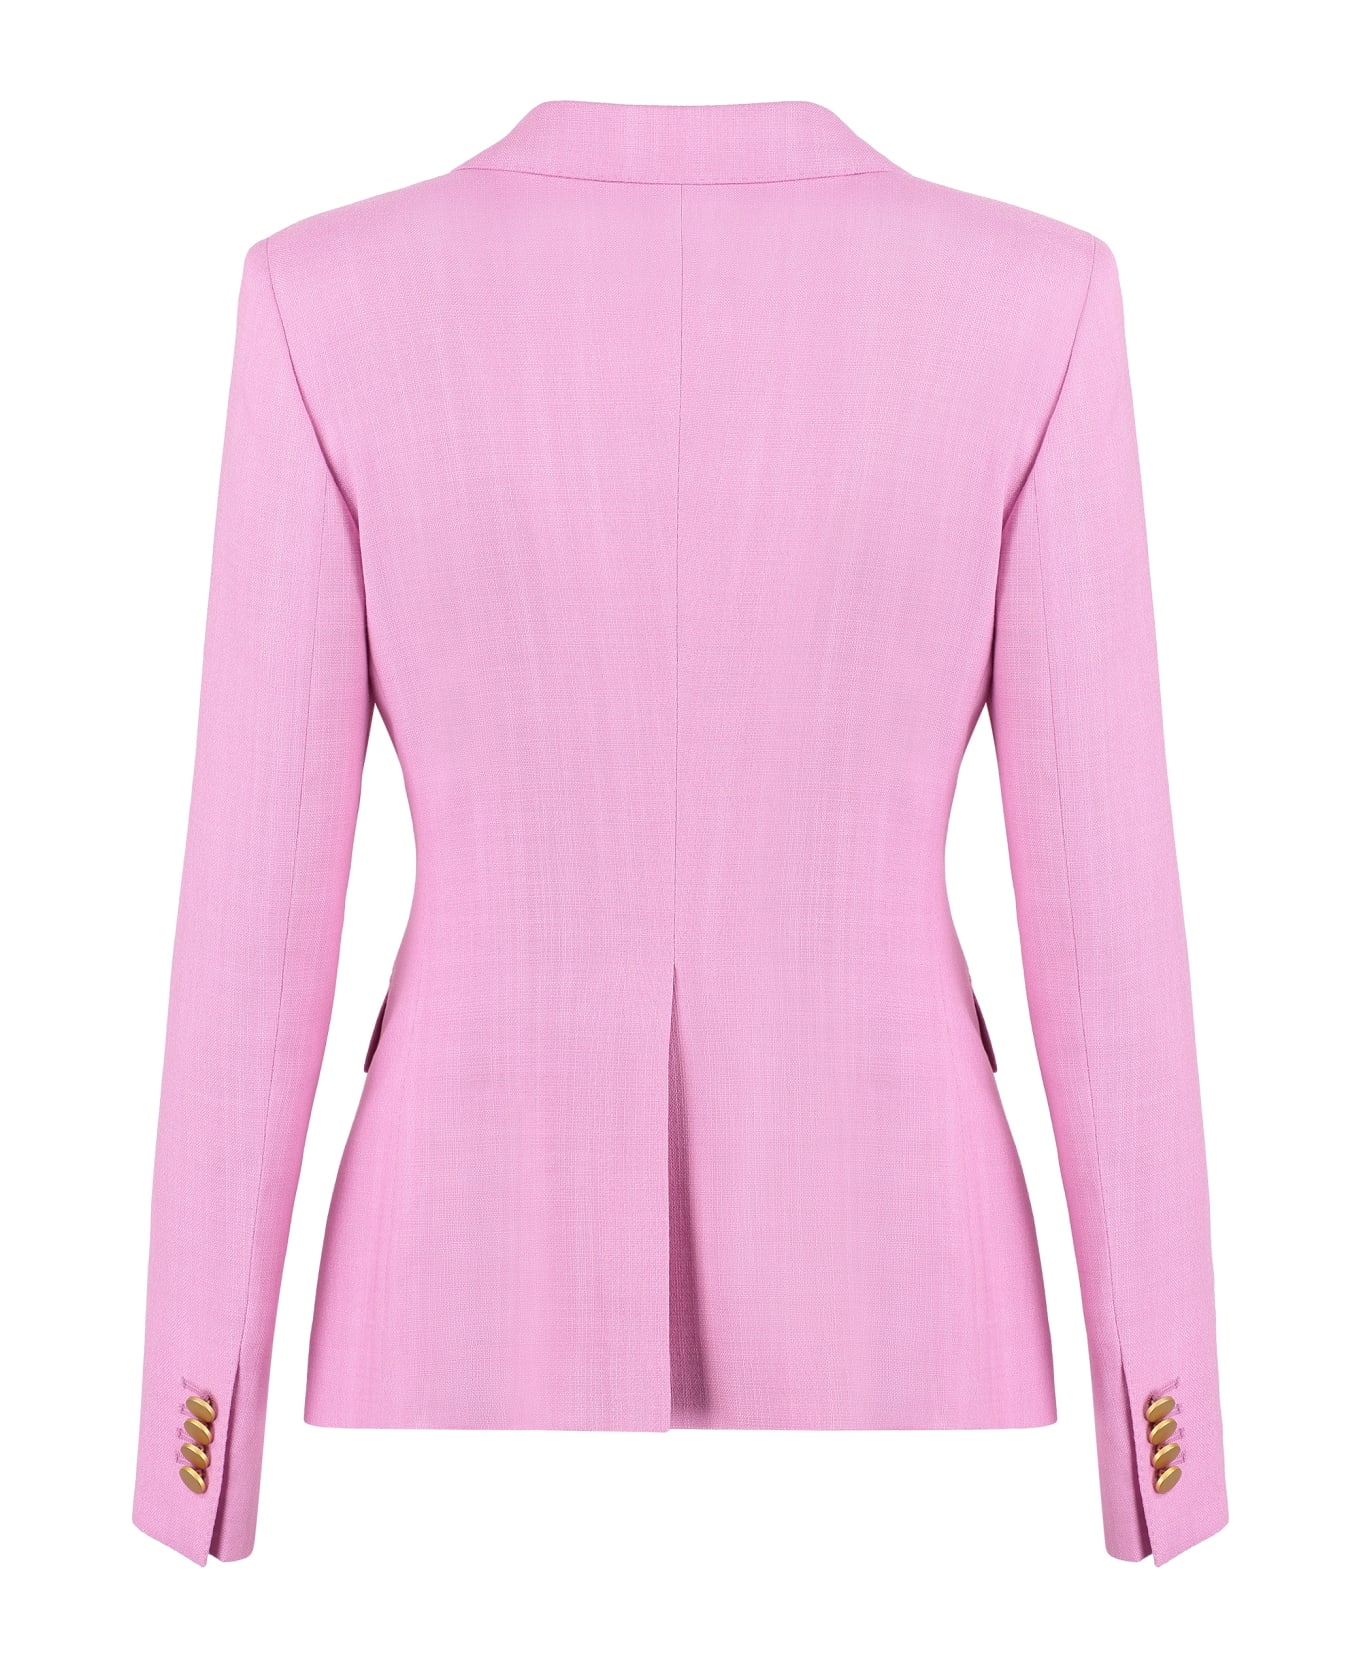 Tagliatore 0205 J-alicya Tweed Jacket - Pink ブレザー